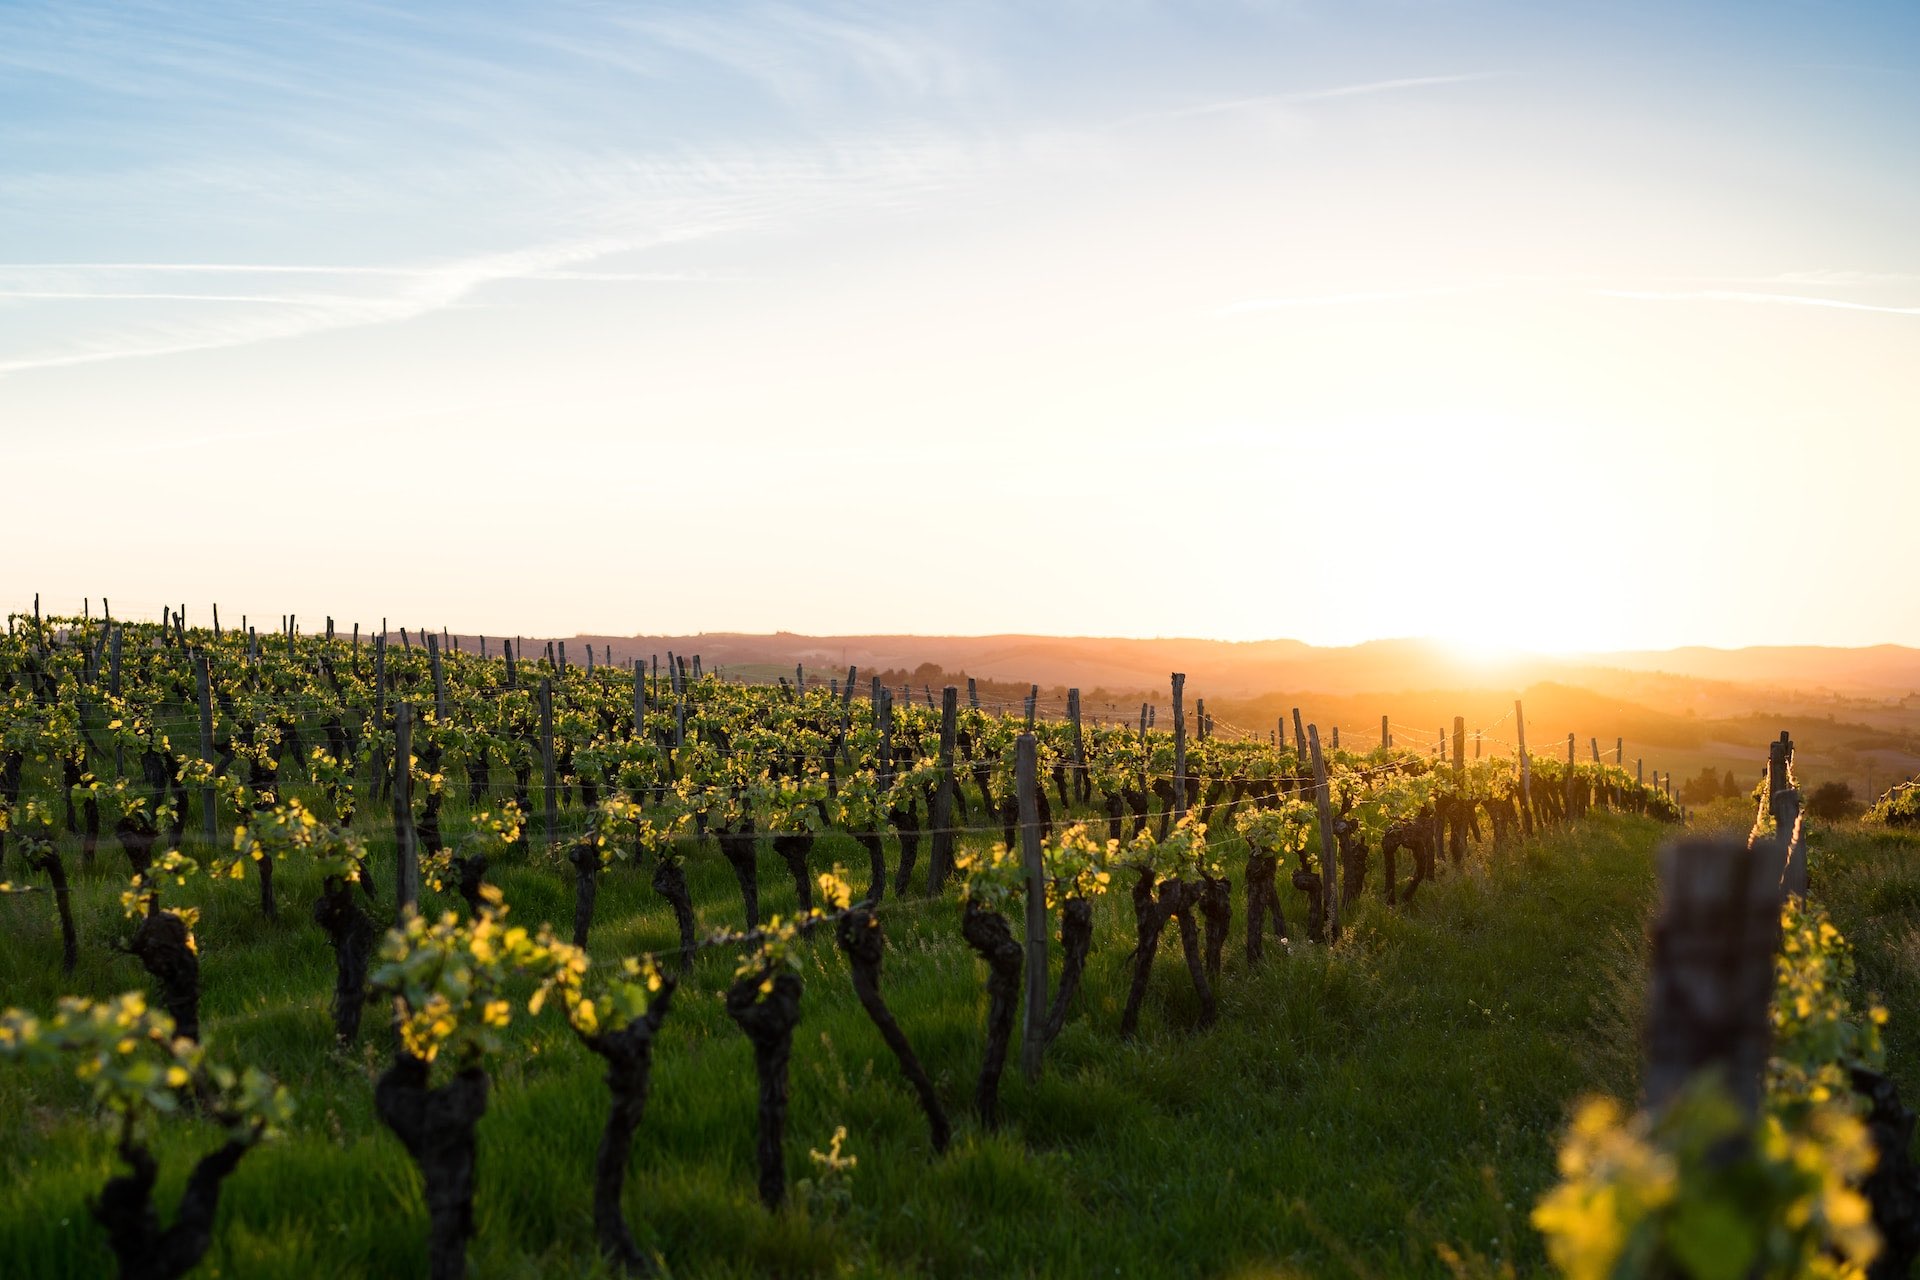 Vineyard at sunset in Languedoc, france 